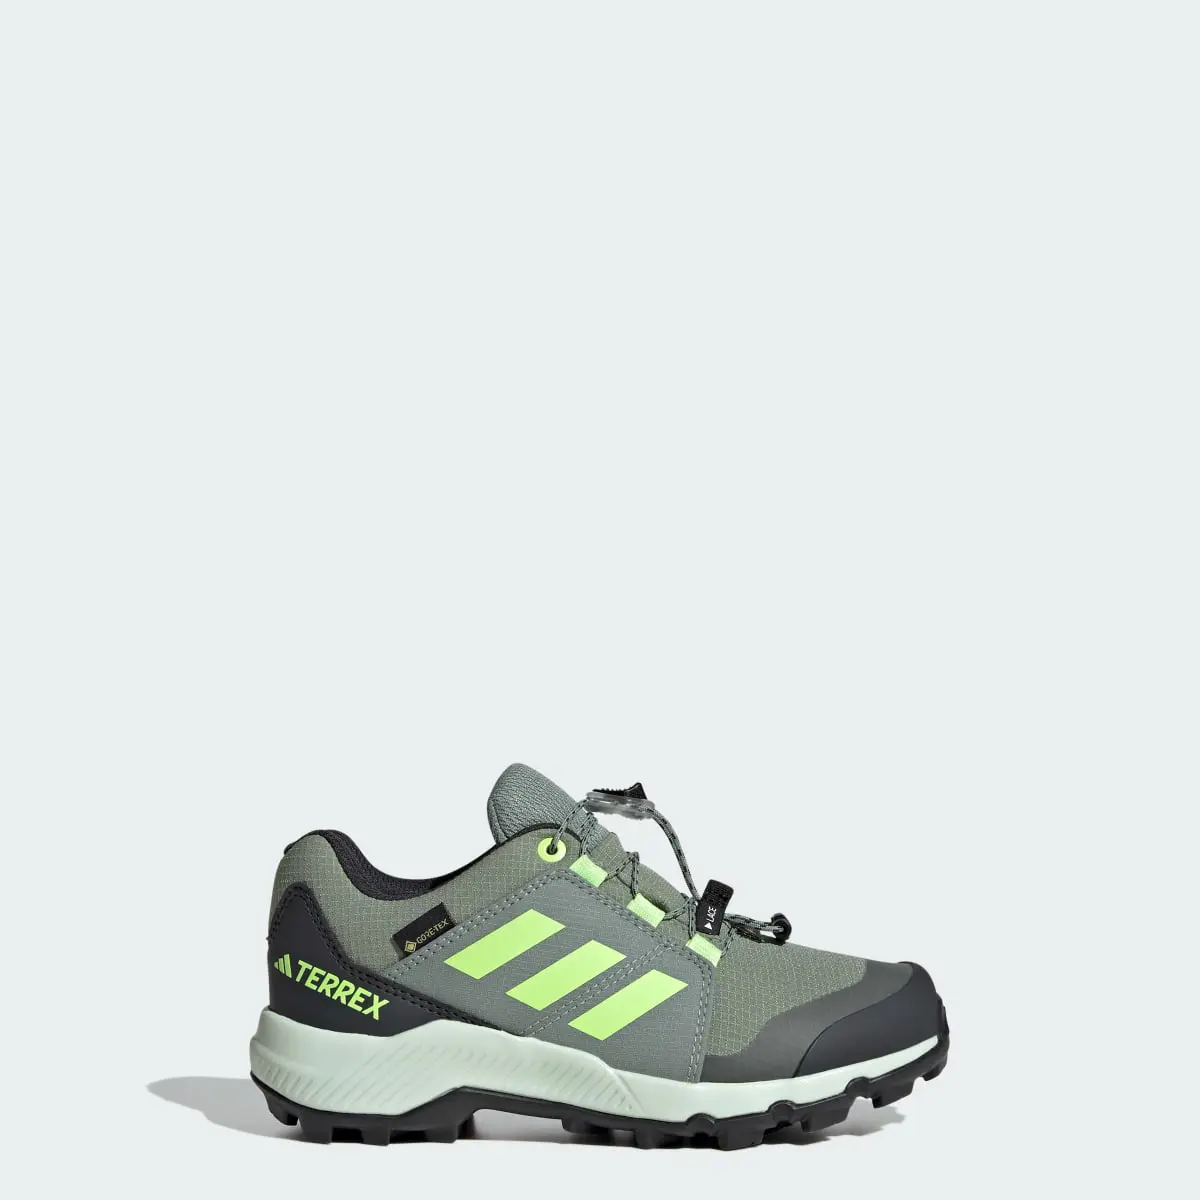 Adidas Terrex GORE-TEX Hiking Shoes. 1